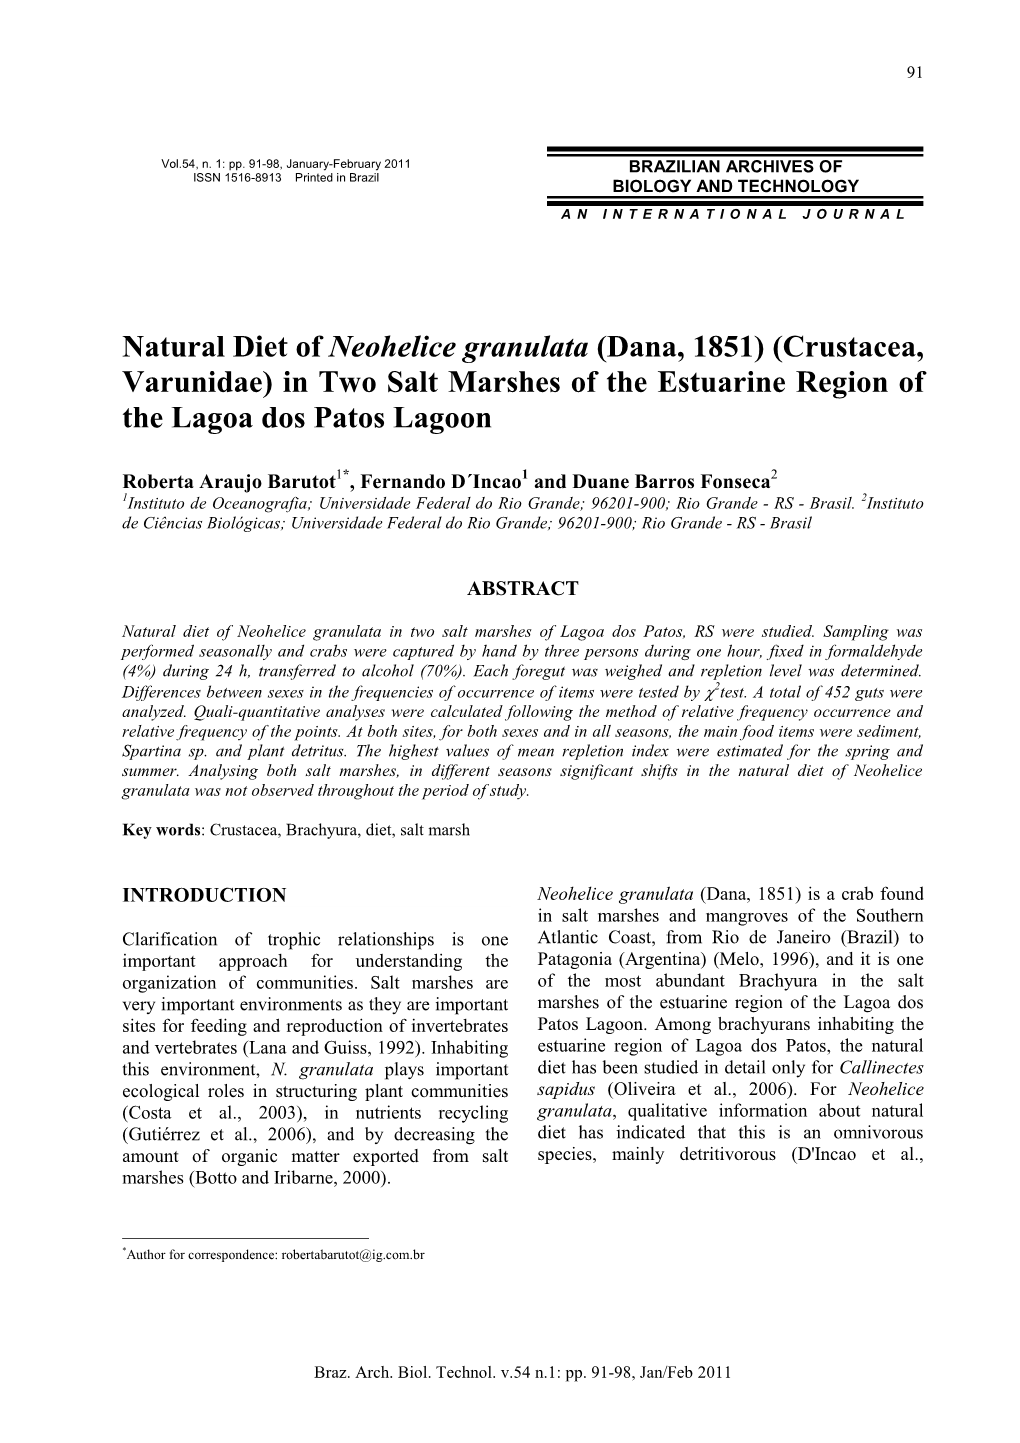 Natural Diet of Neohelice Granulata (Dana, 1851) (Crustacea, Varunidae) in Two Salt Marshes of the Estuarine Region of the Lagoa Dos Patos Lagoon